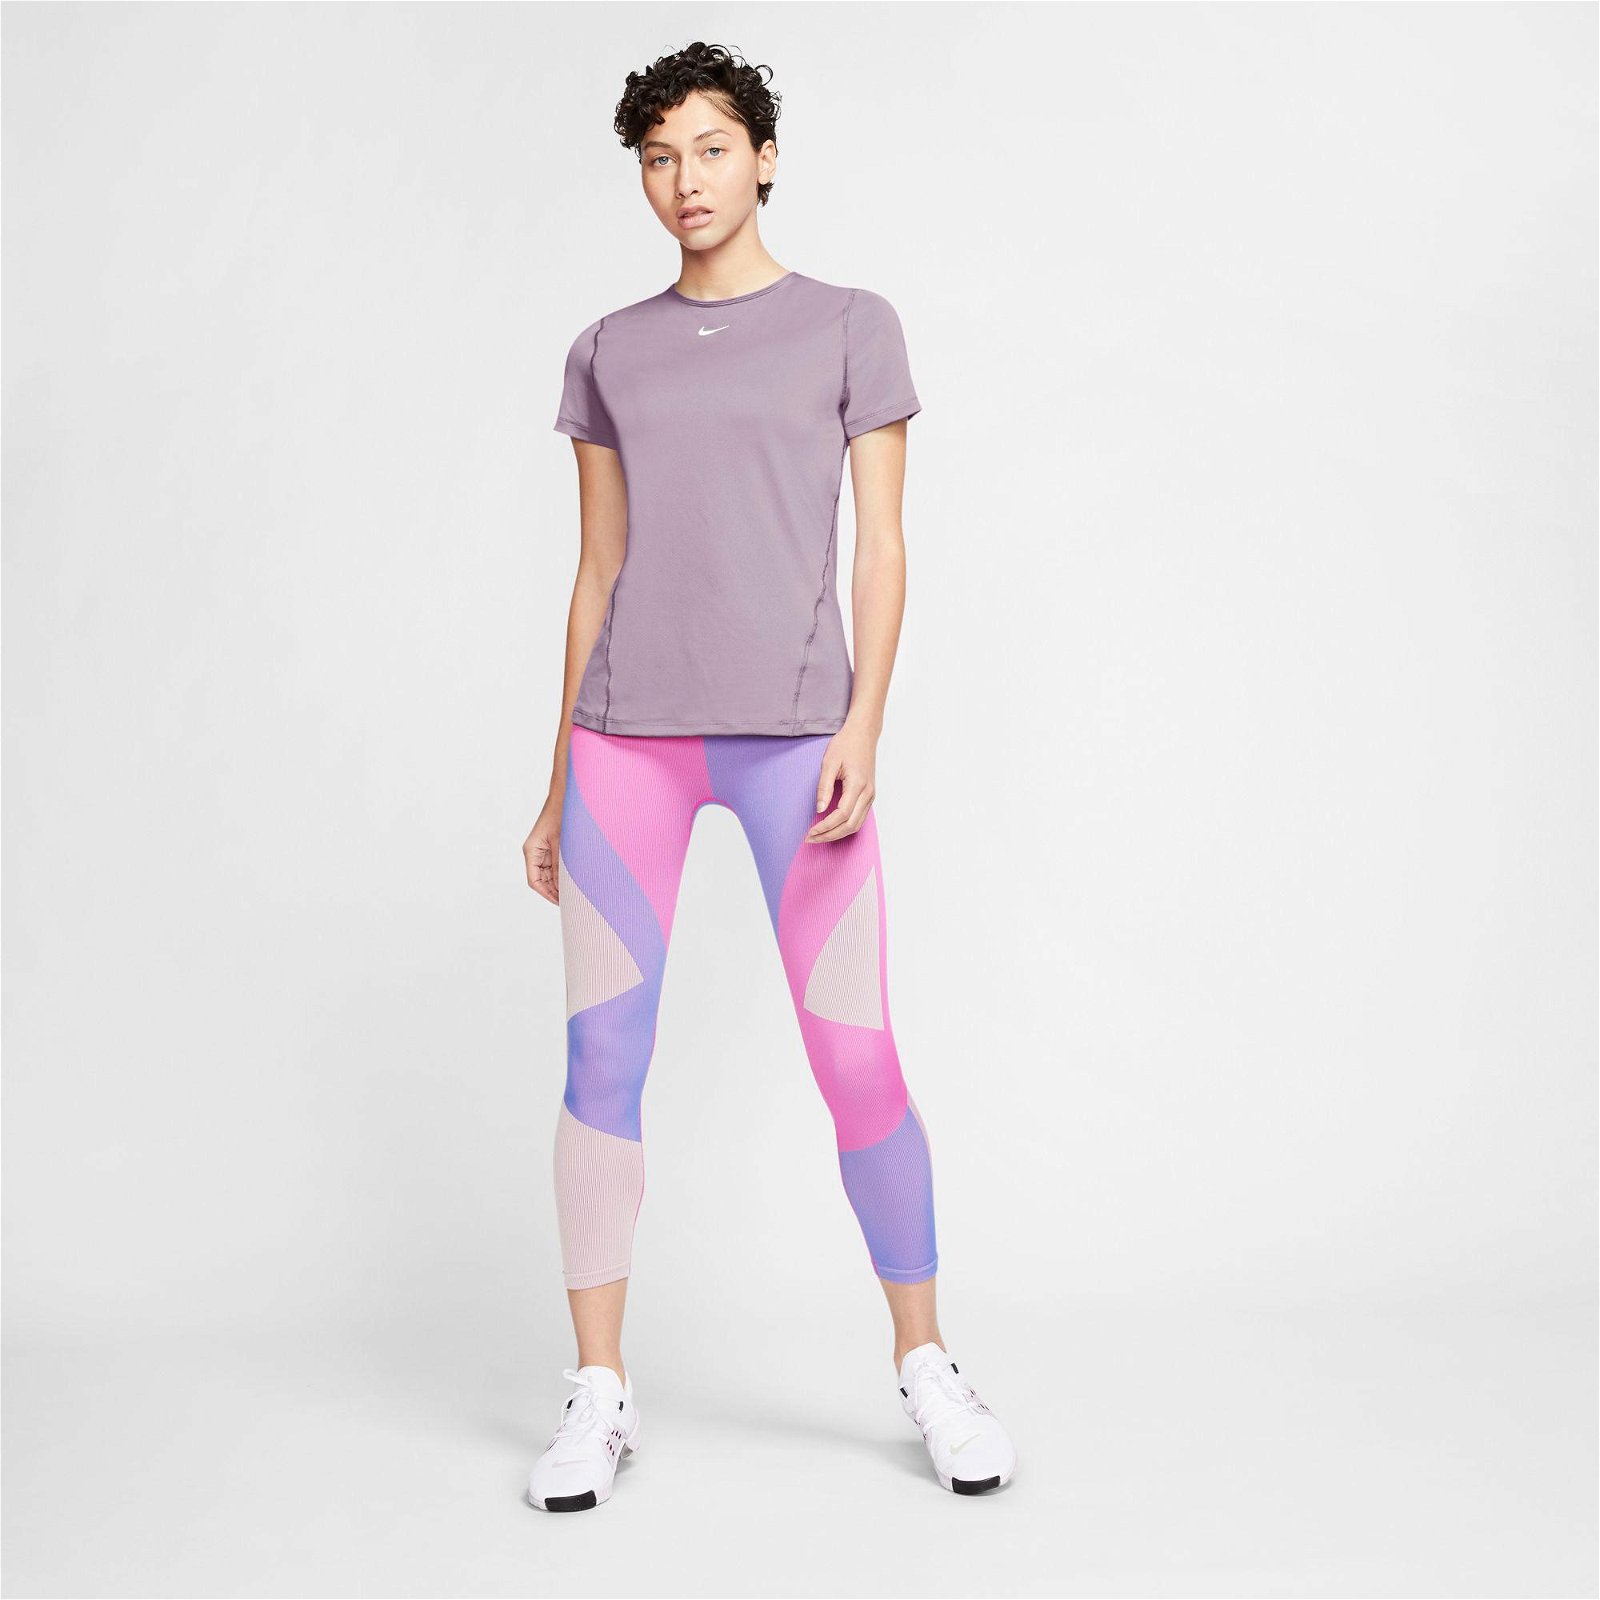 Nike Pro 365 Top Essential Kadın Mor-Lila T-Shirt